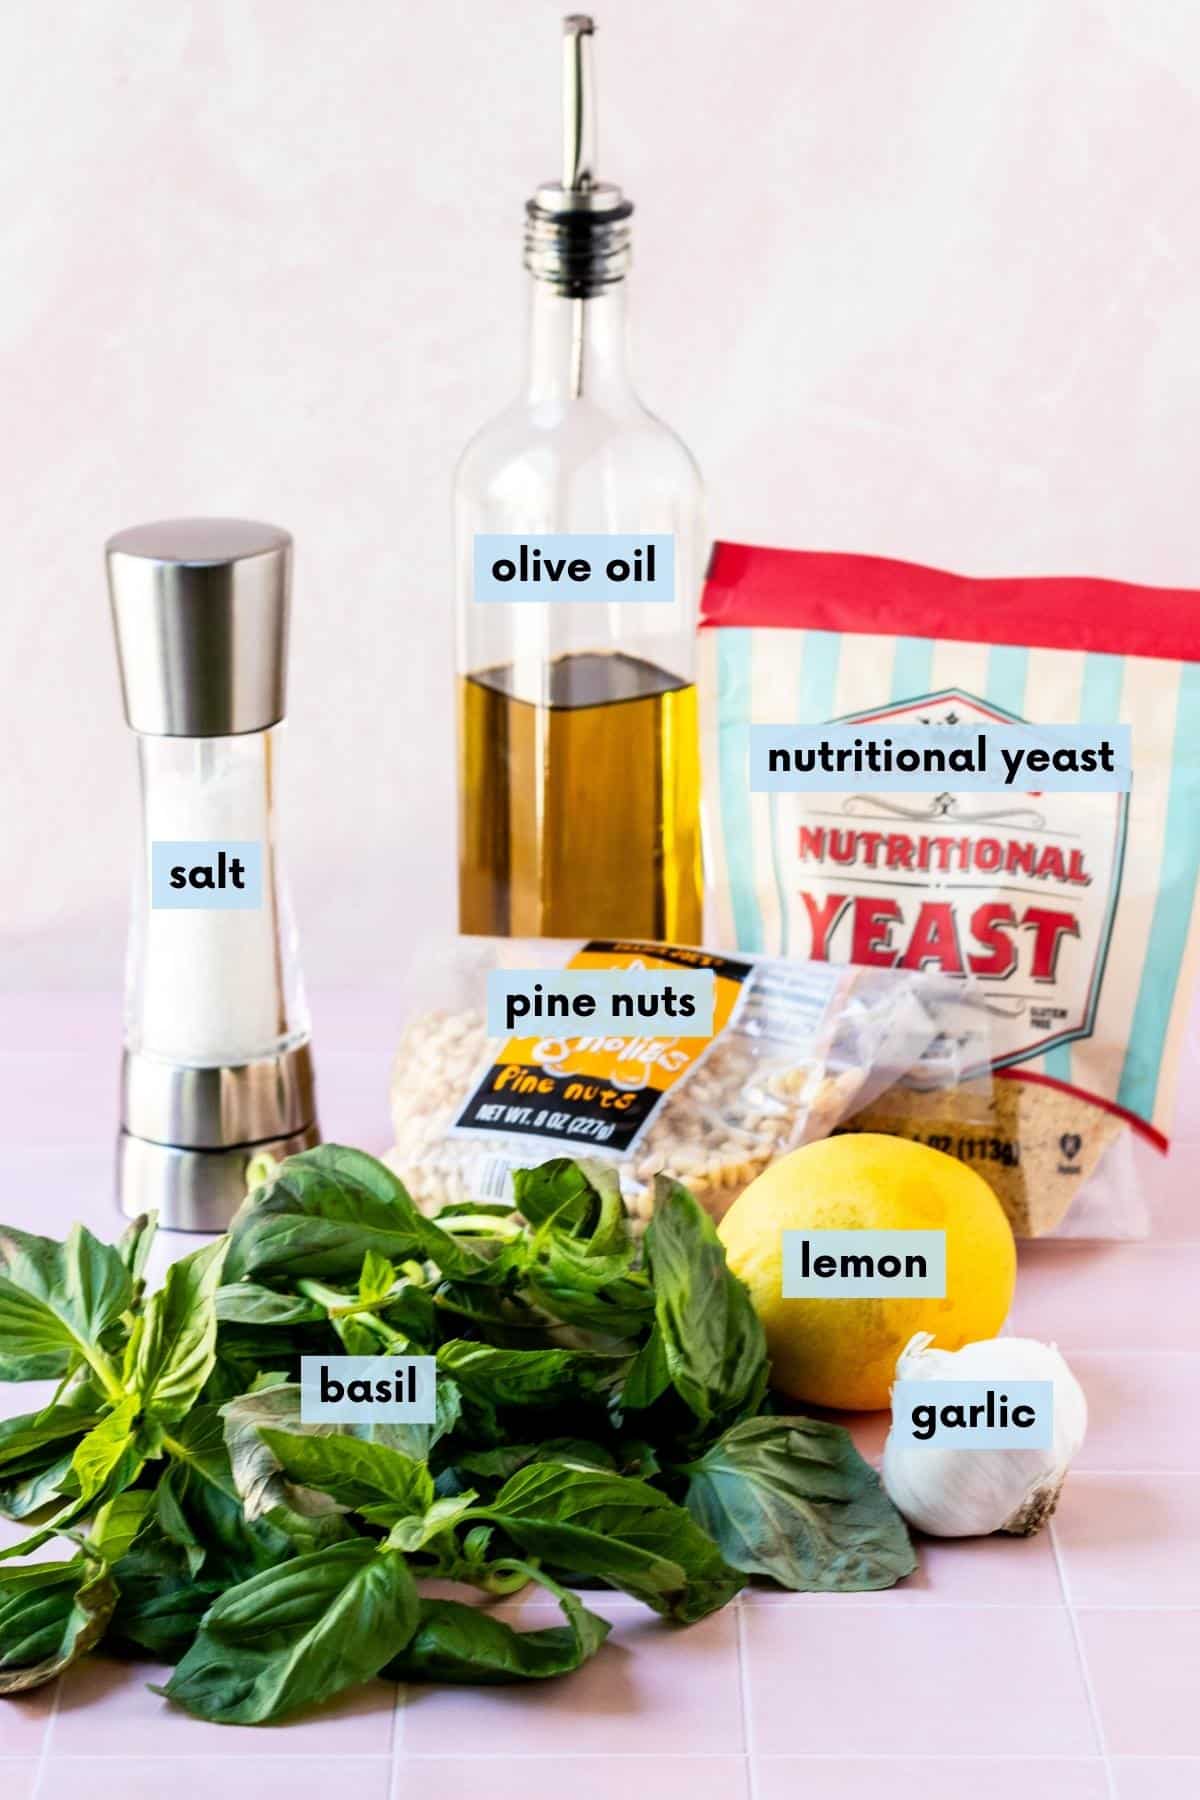 Fresh basil, a lemon, head of garlic, bag of pine nuts, salt shaker, bottle of olive oil, and bag of nutritional yeast.